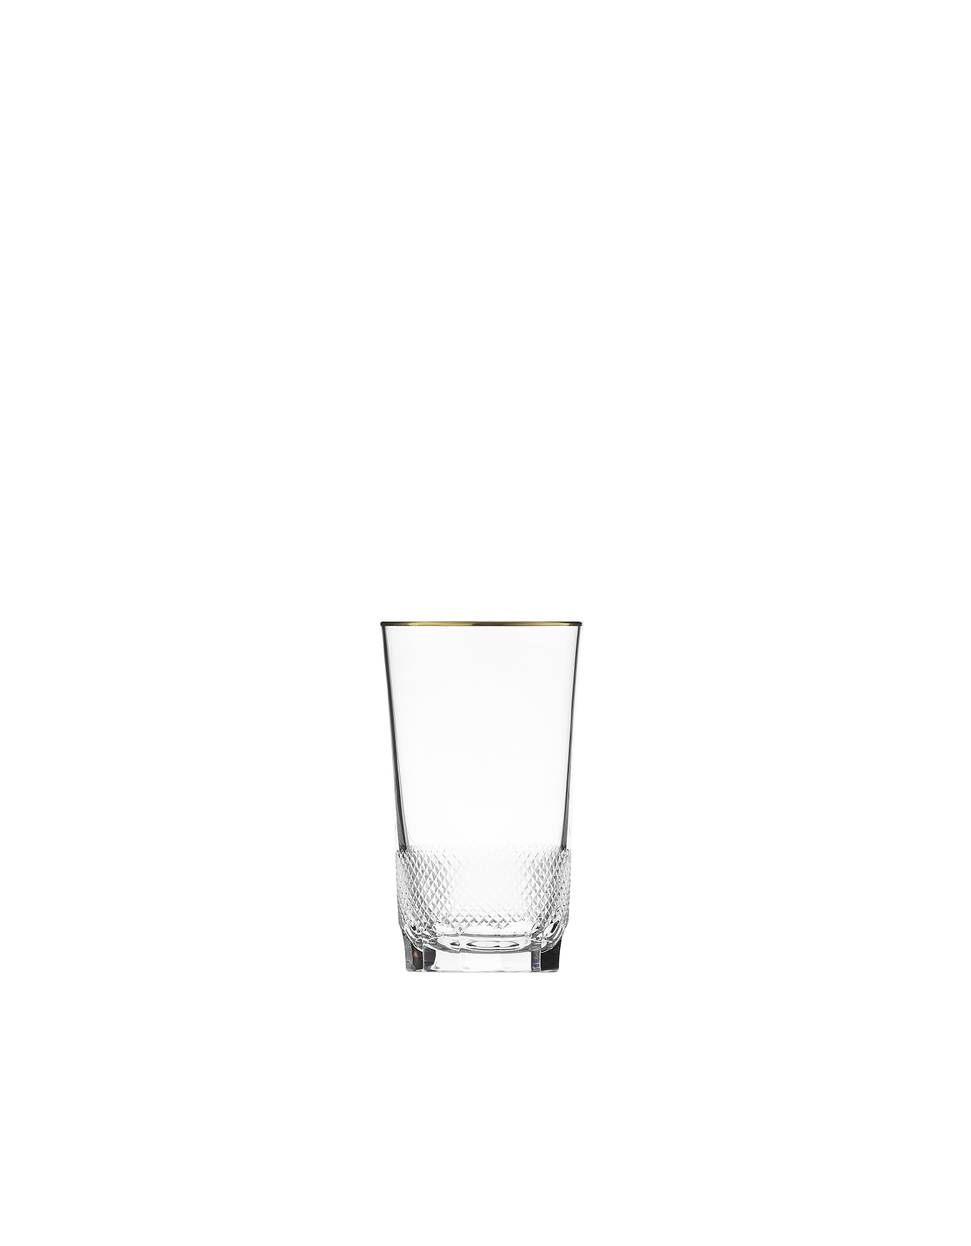 Royal spirit glass, 70 ml